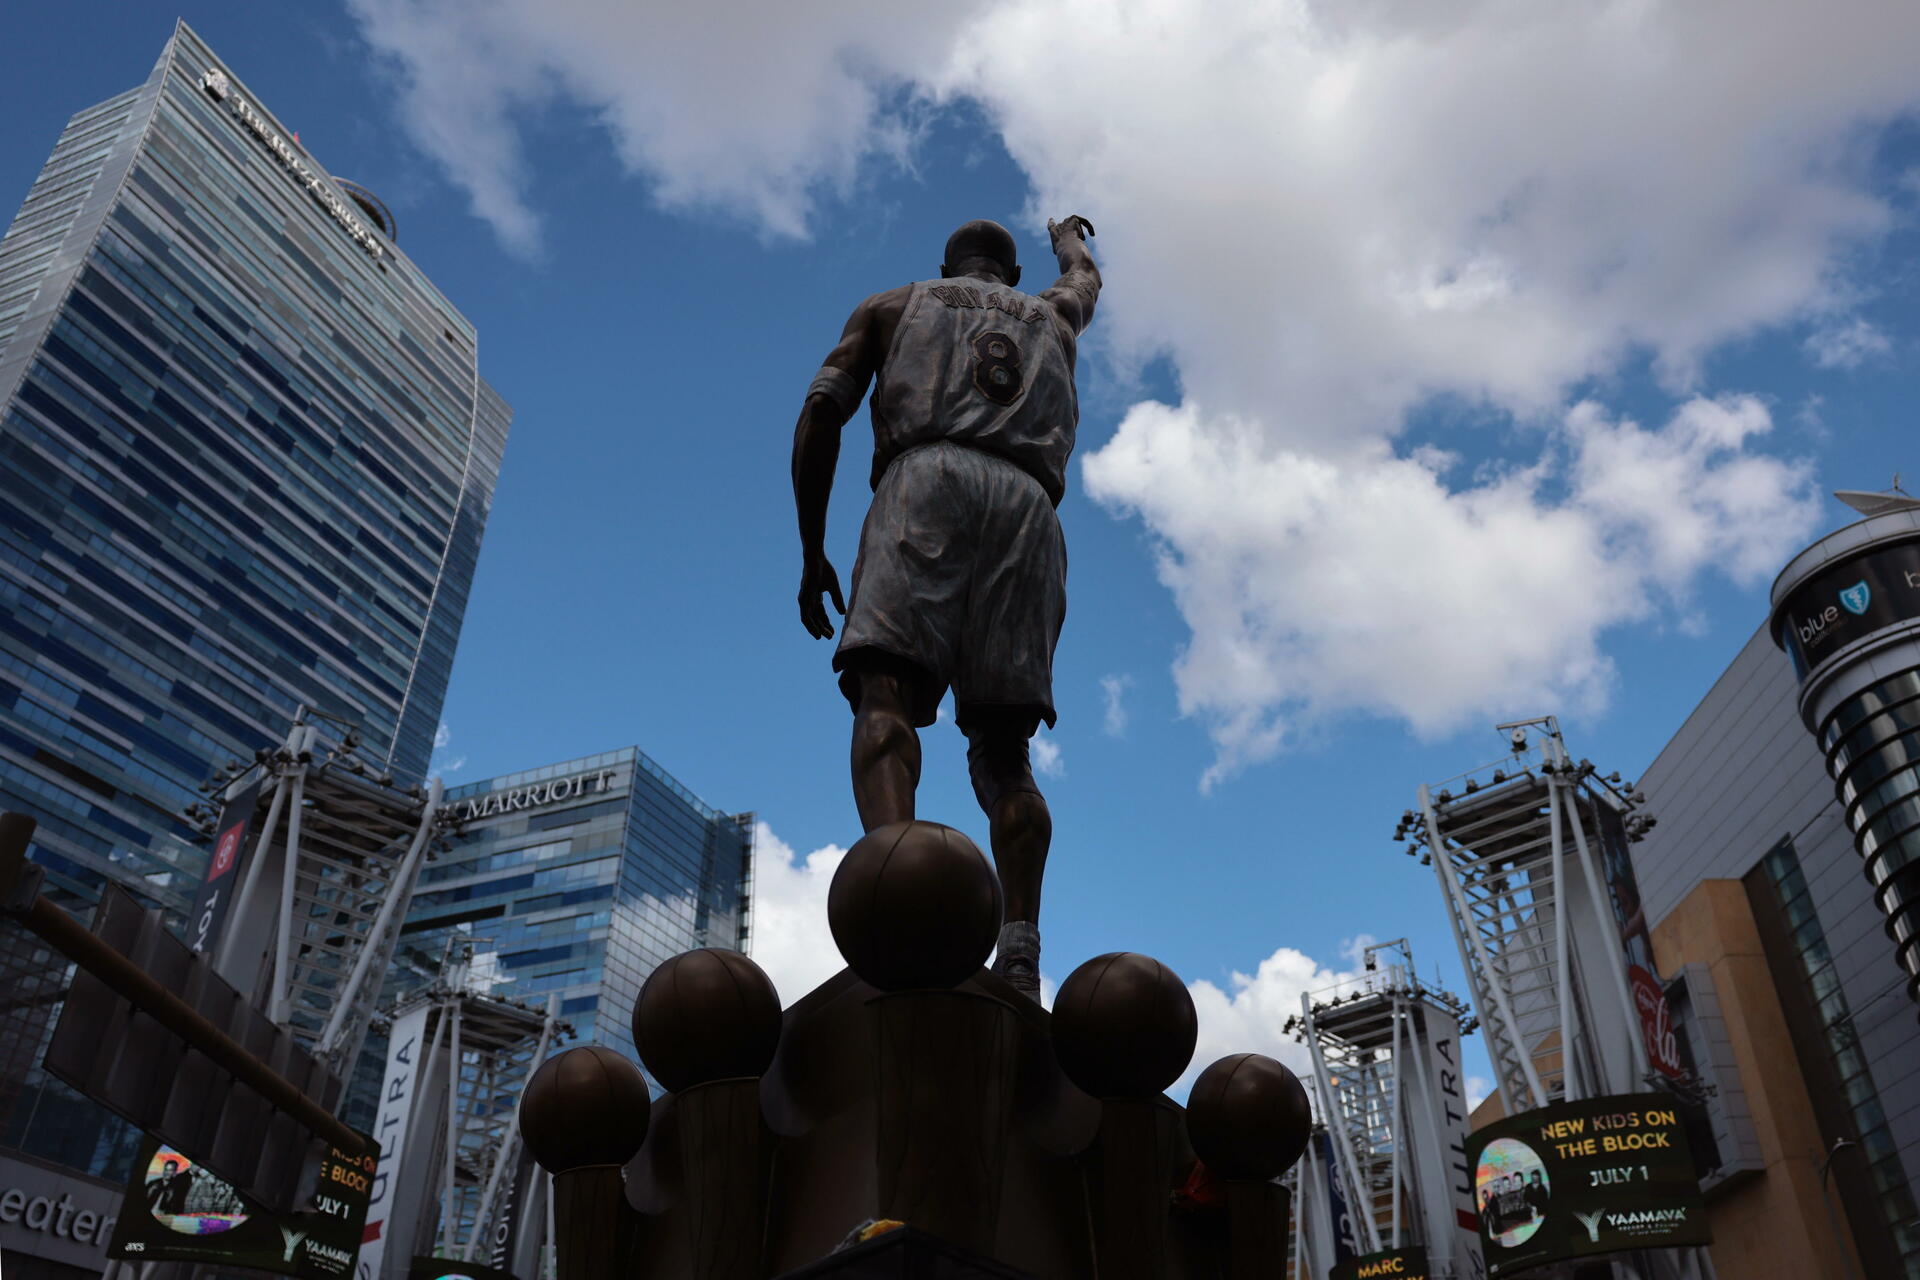 Los Lakers inauguran la estatua de Kobe Bryant